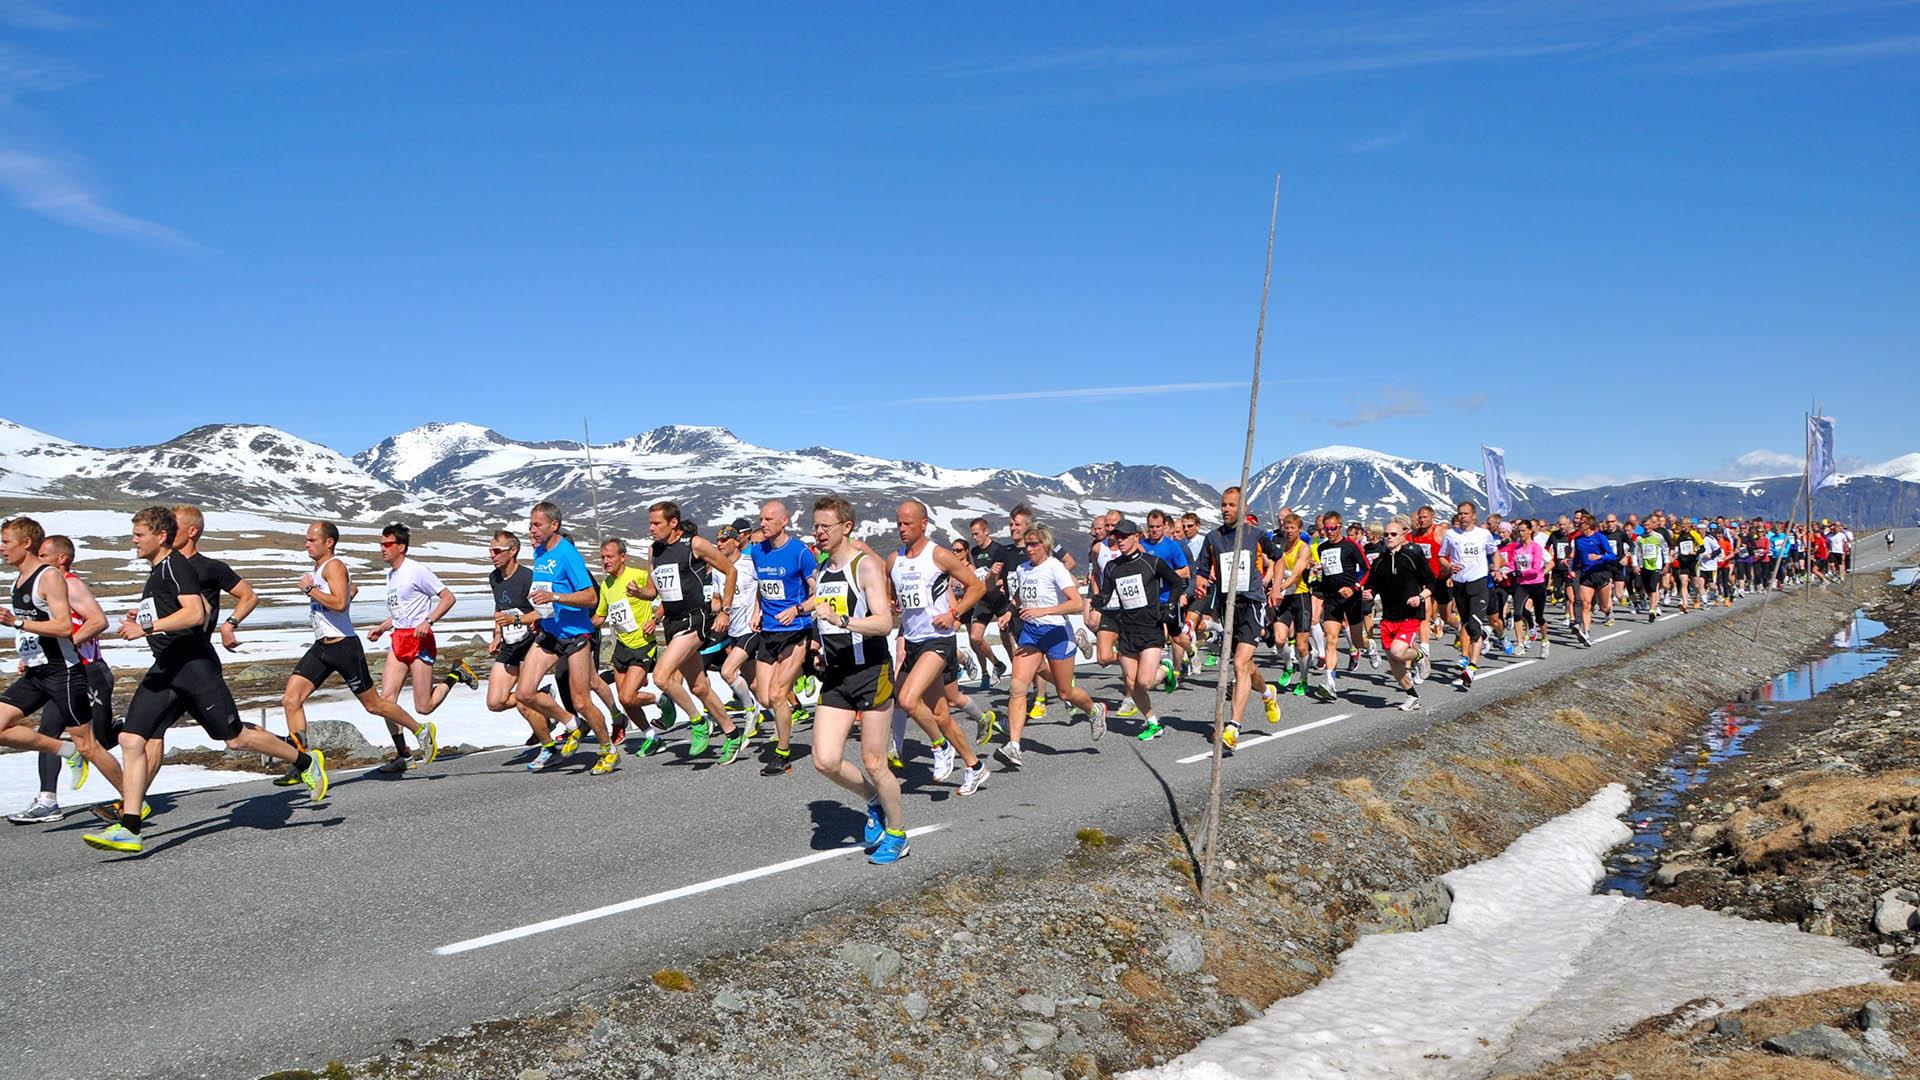 Marathon runners on a mountain pass road